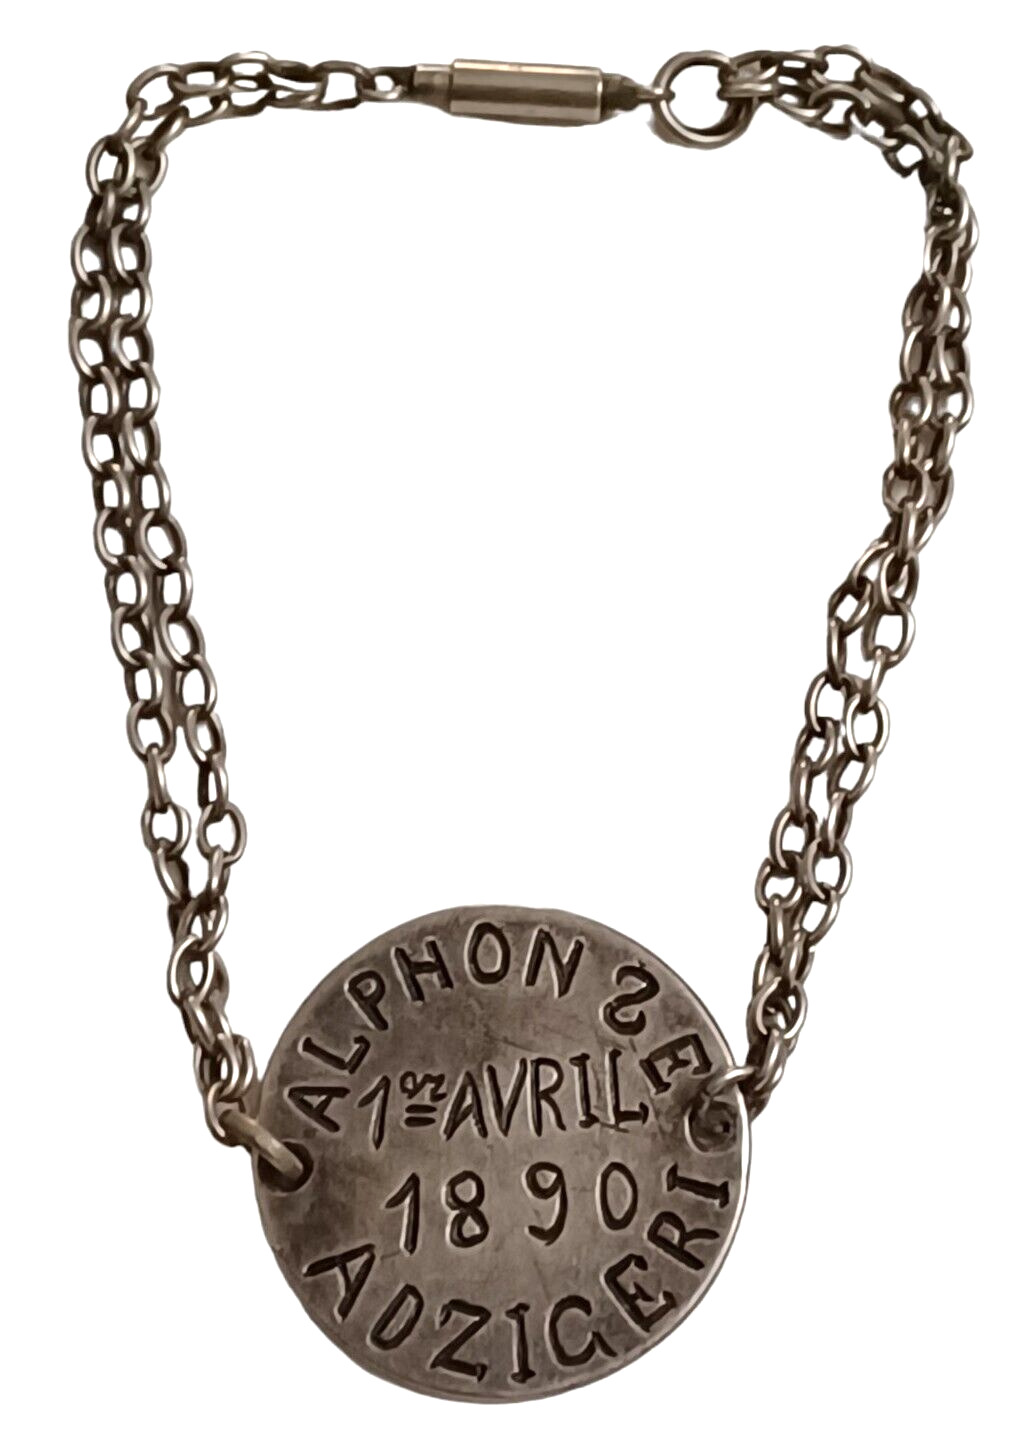 WWI ID Bracelet Named Alphonse Adzigeri Bracelet Verviers Liege 1890 No. 31781